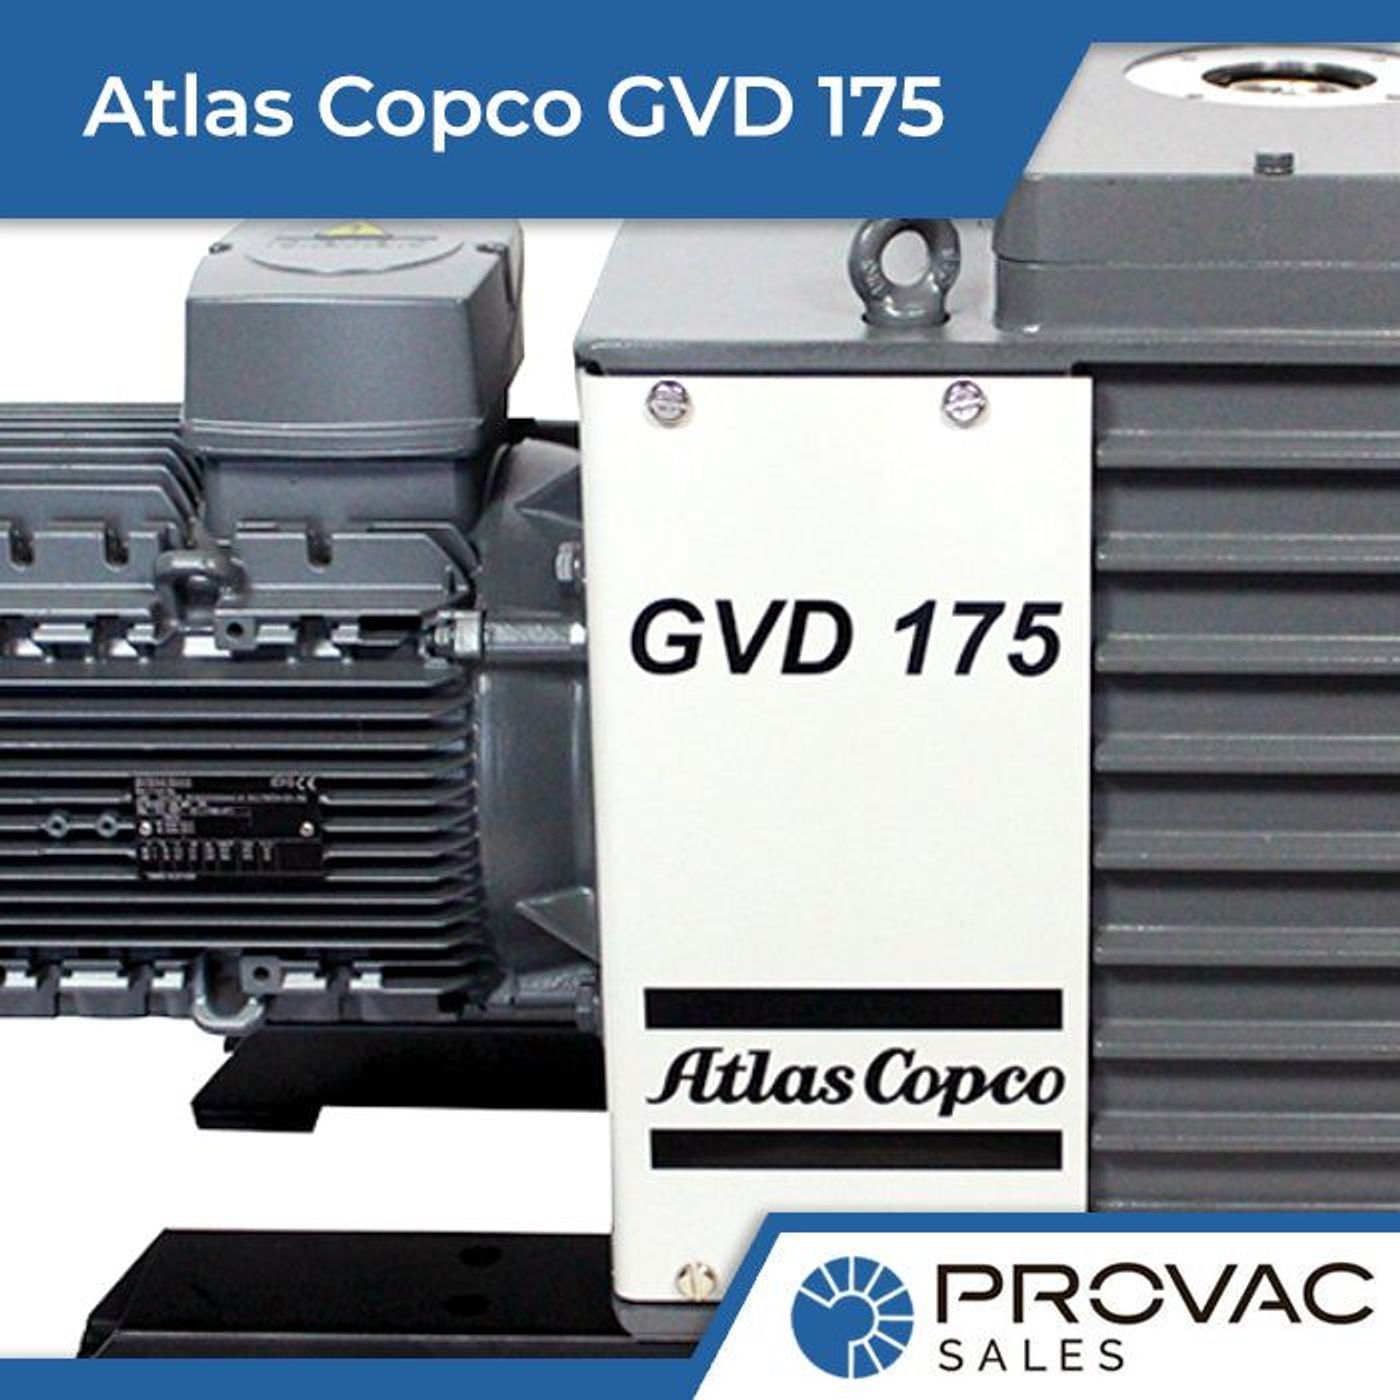 Product Spotlight: Atlas Copco GVD 175 Rotary Vane Pump